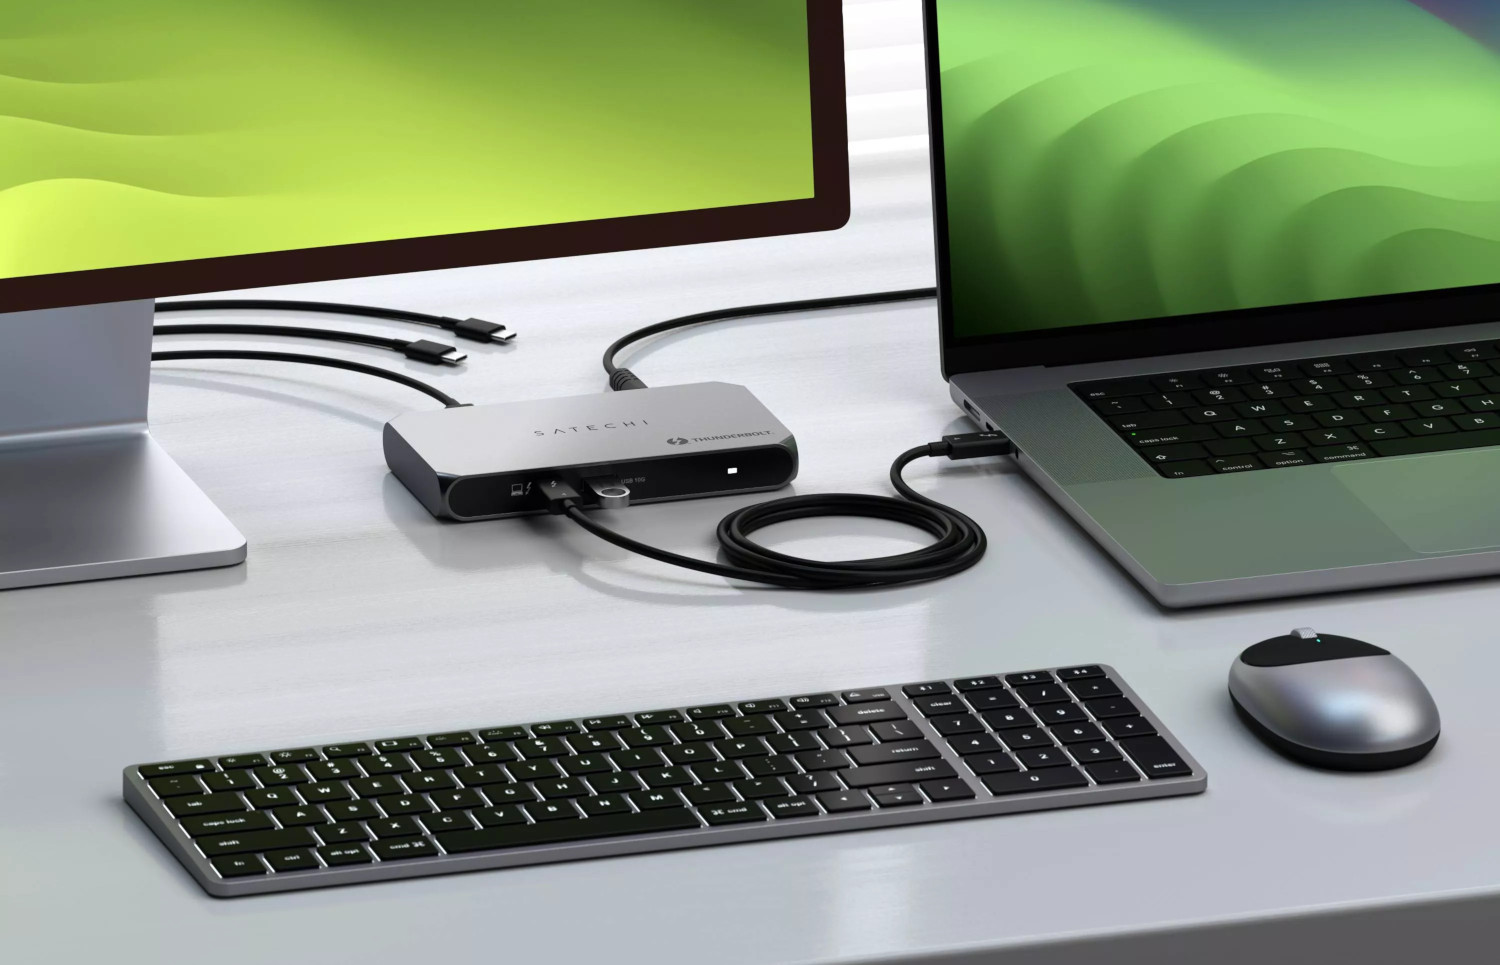 Stand & Hub For Mac Mini / Studio With NVMe SSD Enclosure